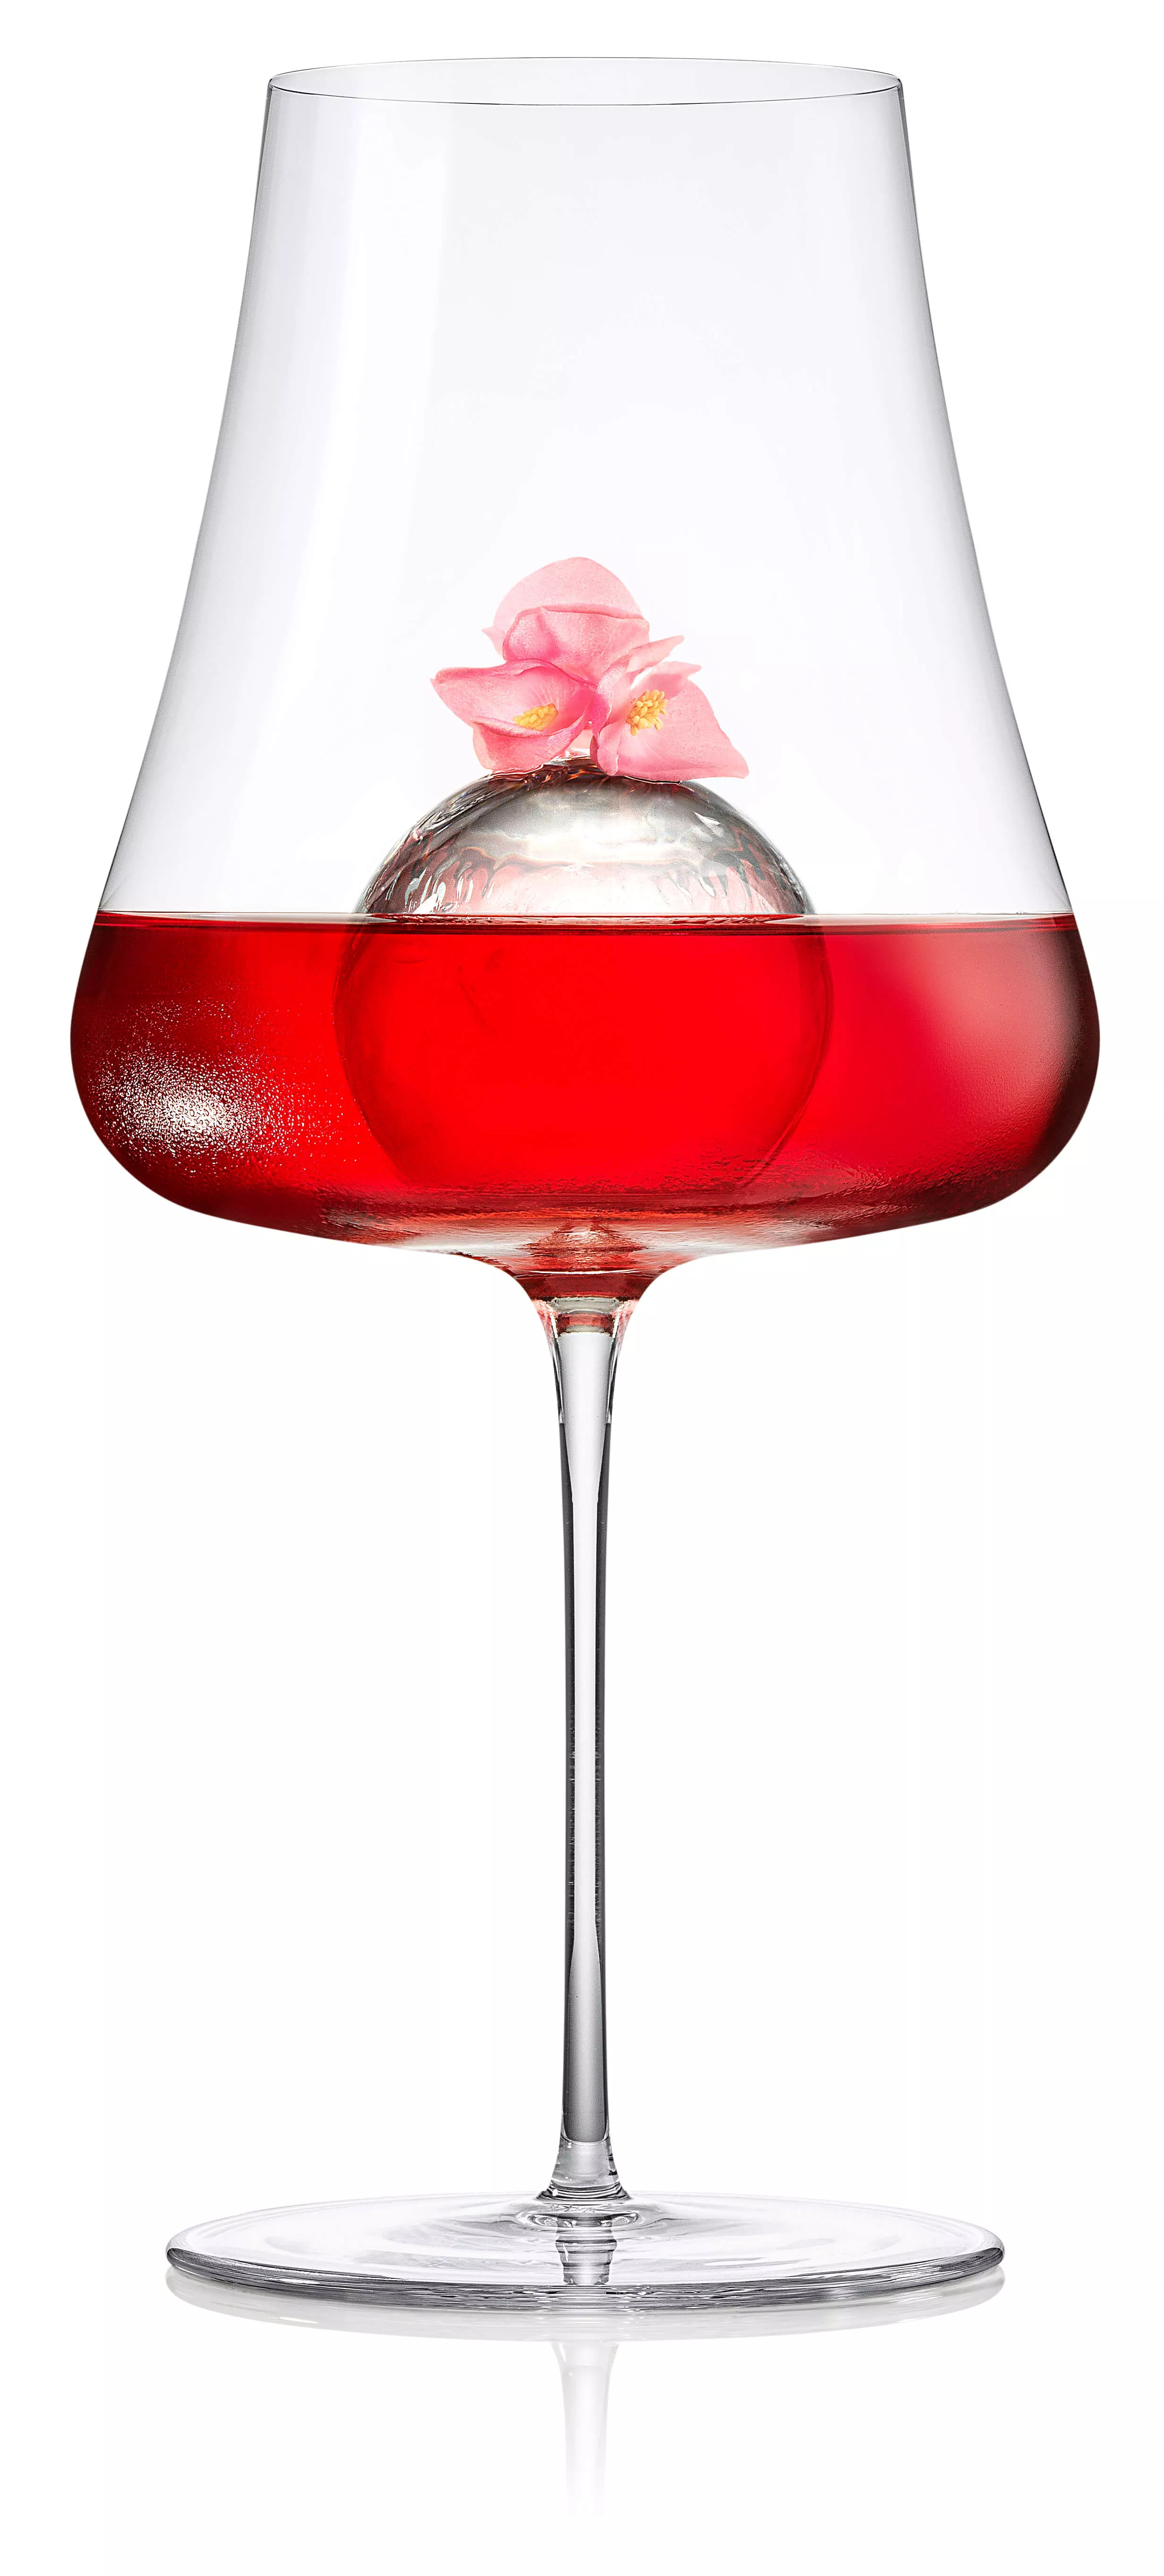 Roku Sakura Aperitif served in a wine glass with Sakura garish